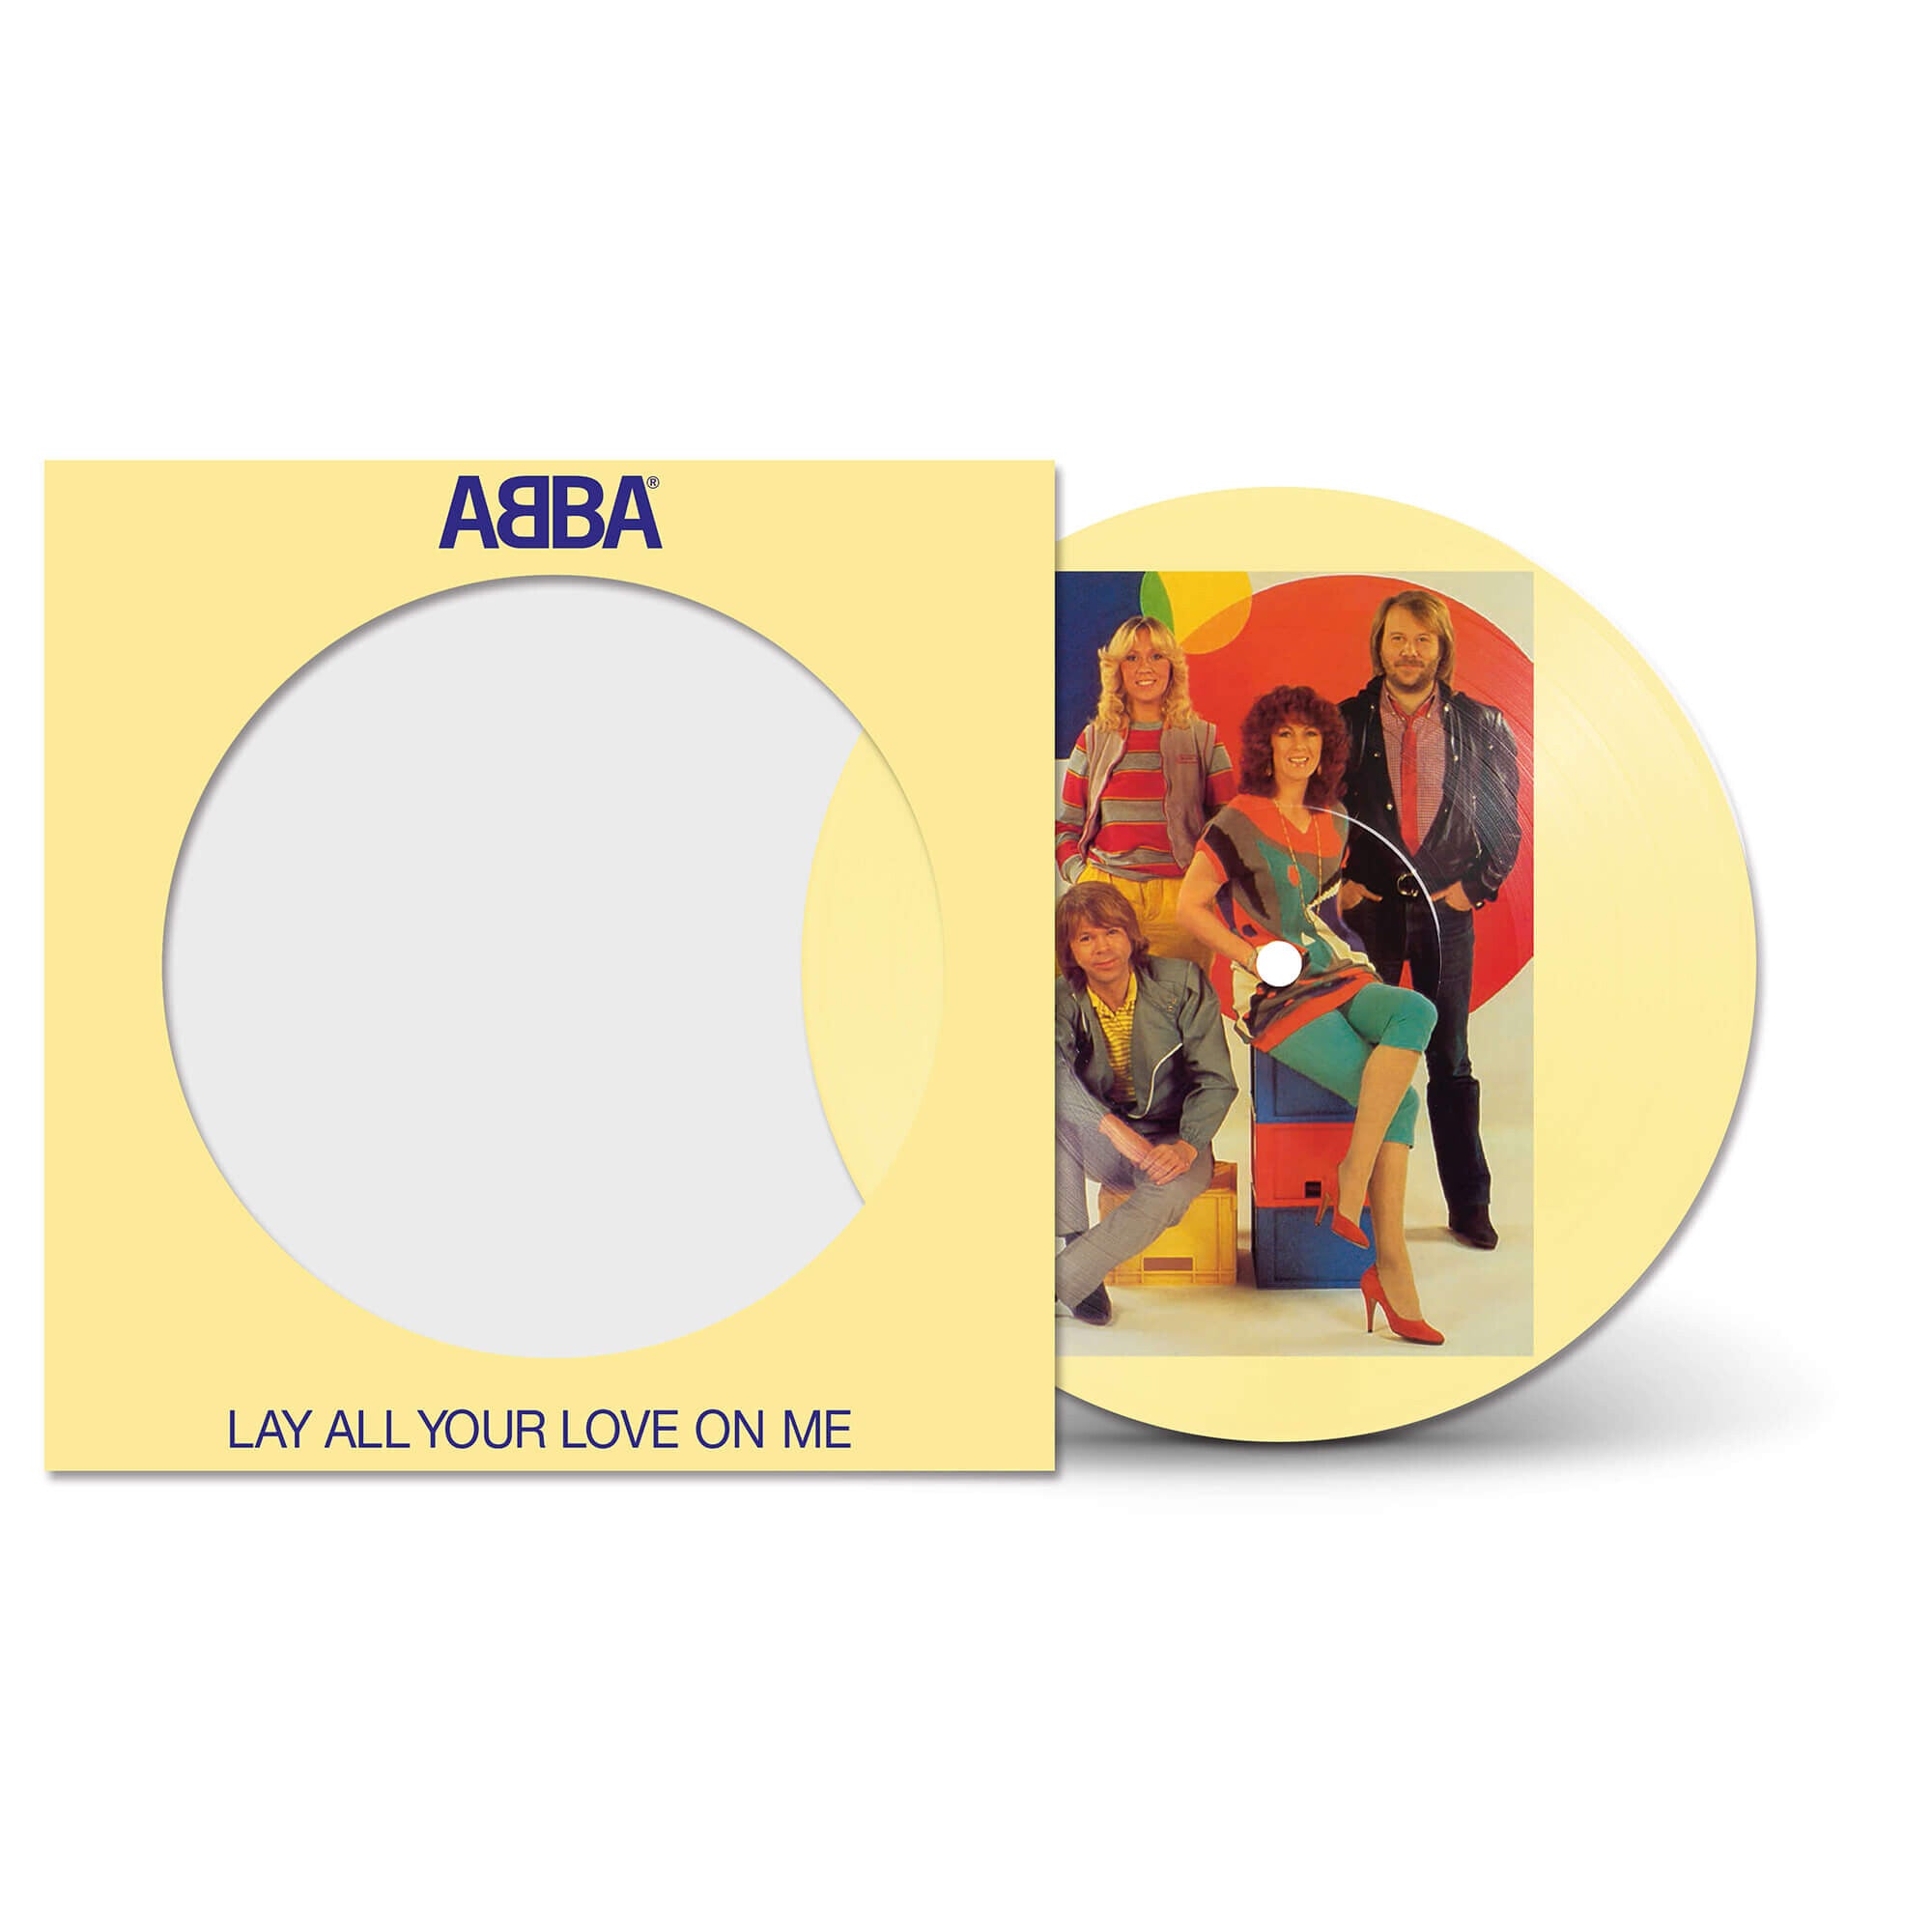 https://images.bravado.de/prod/product-assets/product-asset-data/abba/abba/products/134254/web/297068/image-thumb__297068__3000x3000_original/ABBA-Lay-All-Your-Love-On-Me-40th-Anniversary-Ltd-Picture-Disc-Vinyl-134254-297068.d9f36b65.jpg